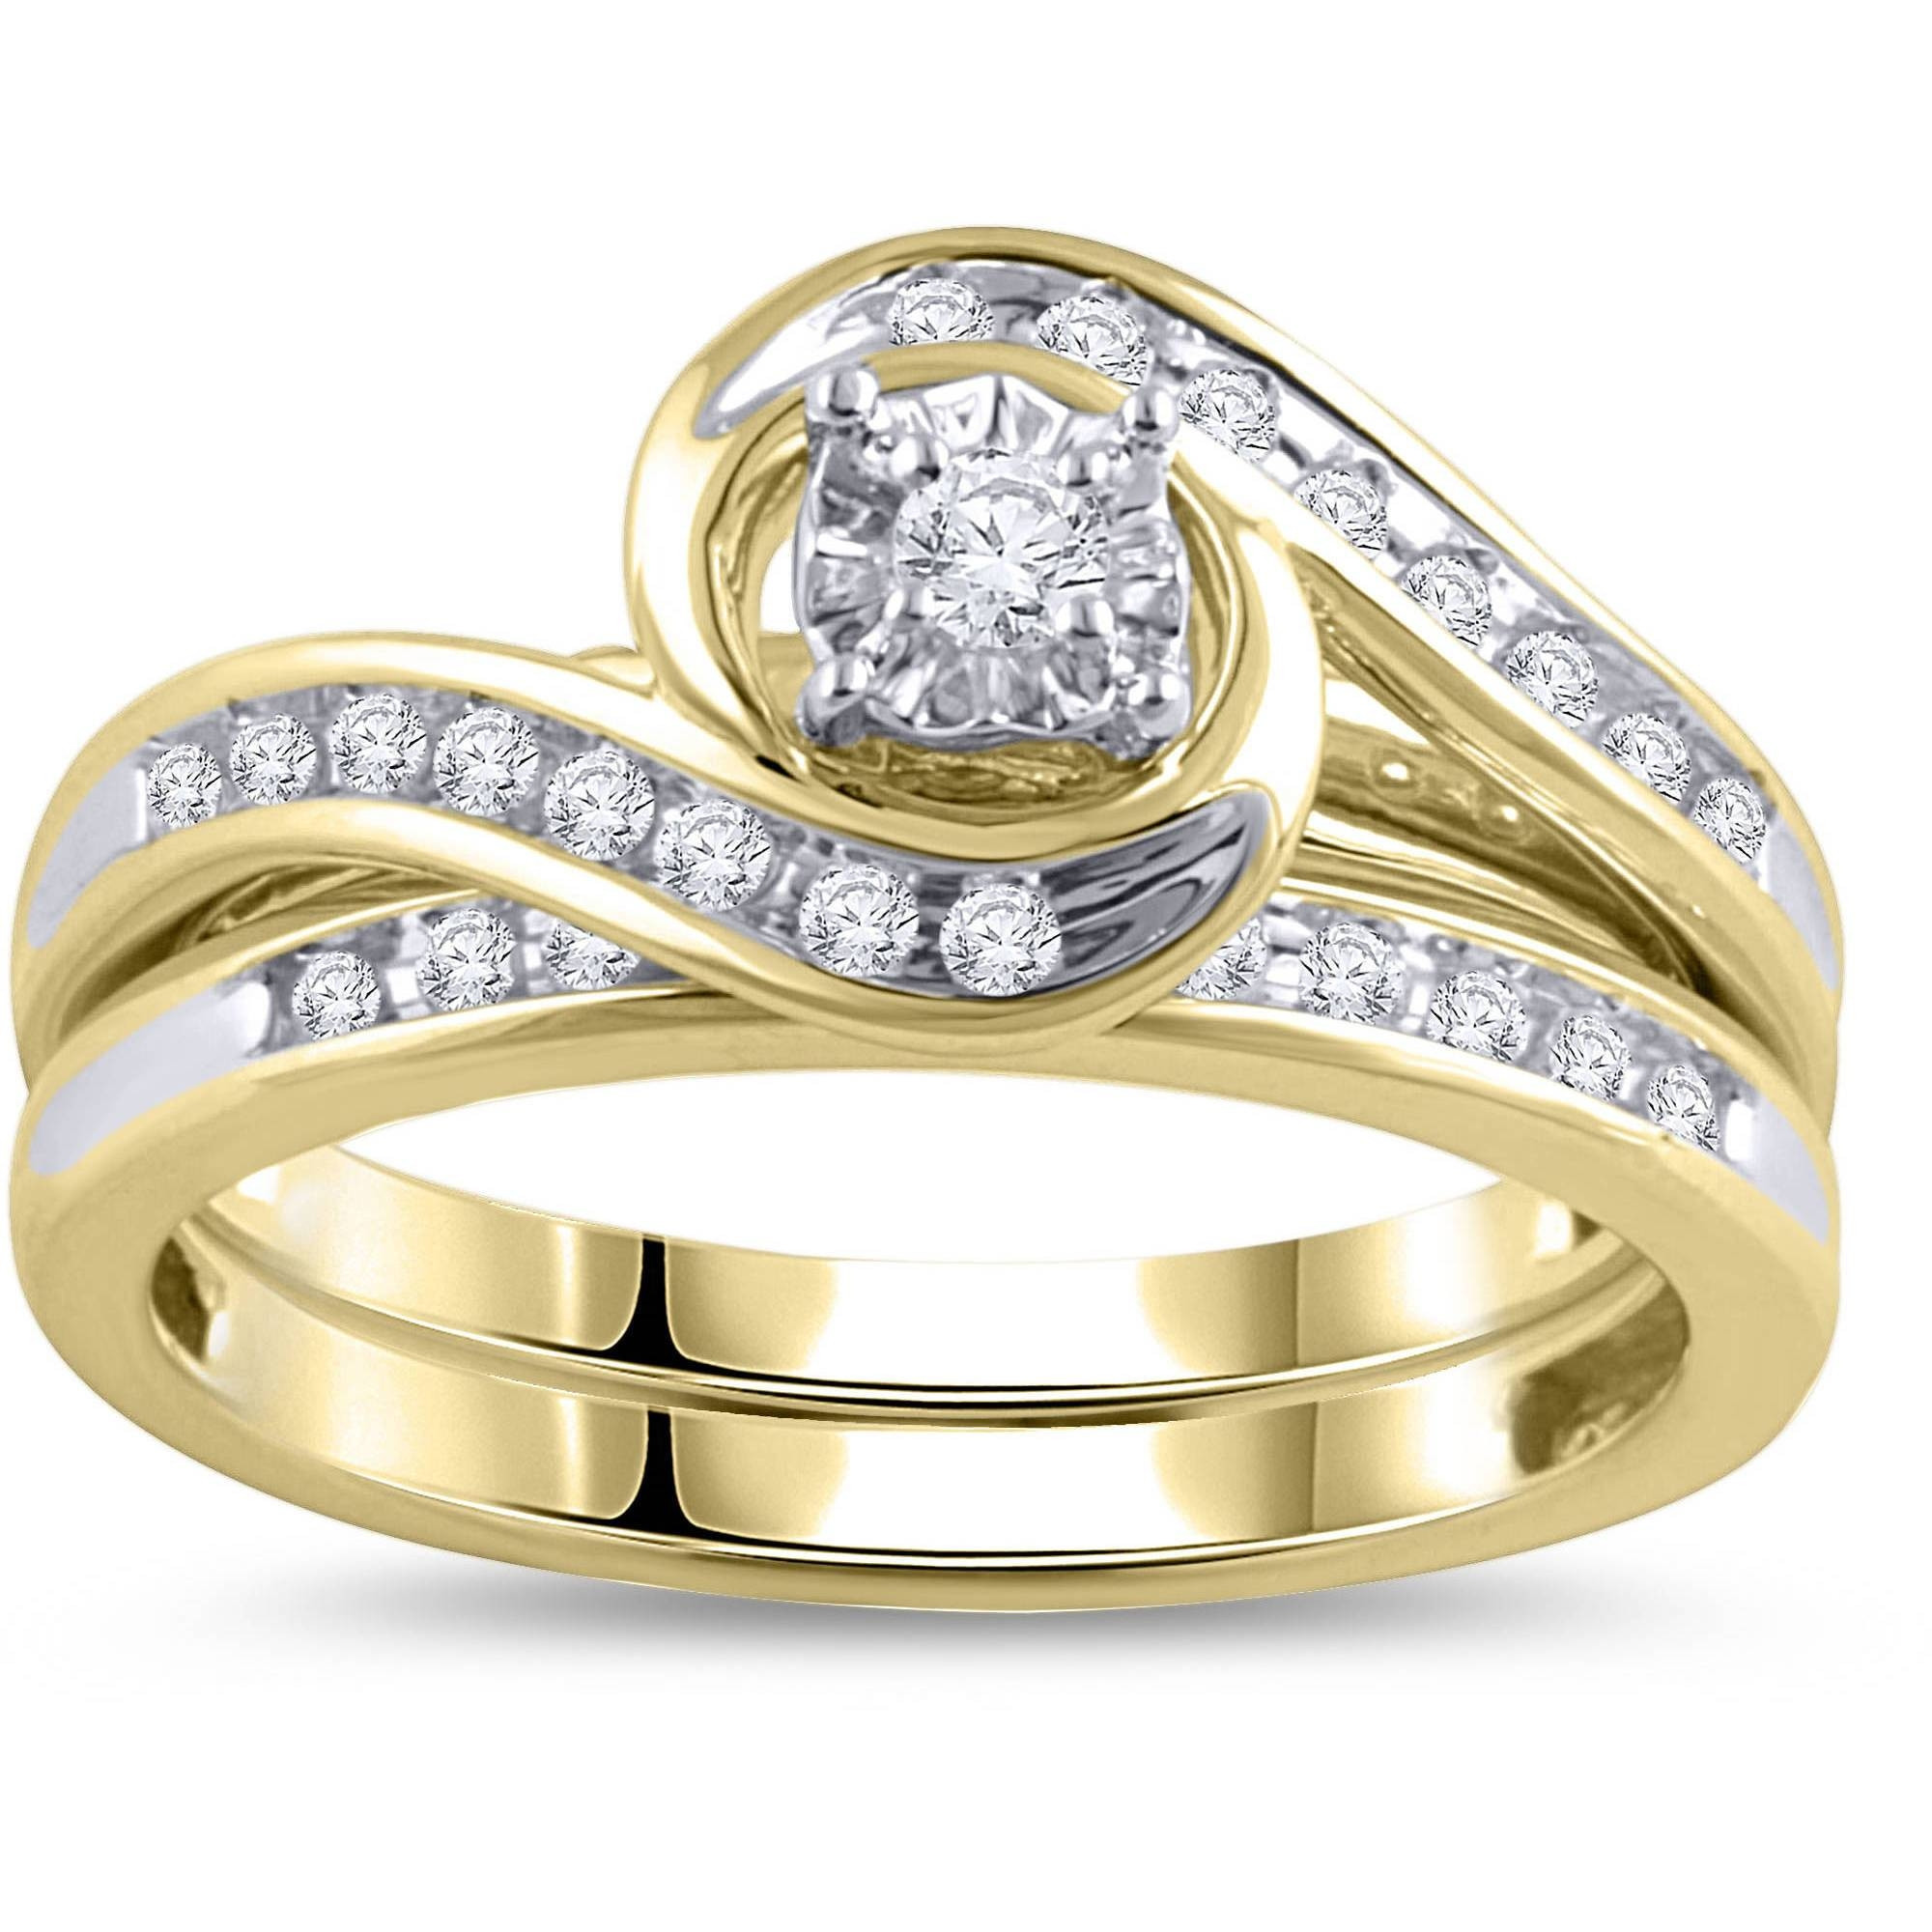 Wedding Rings Sets At Walmart
 2019 Popular Wedding And Engagement Ring Sets